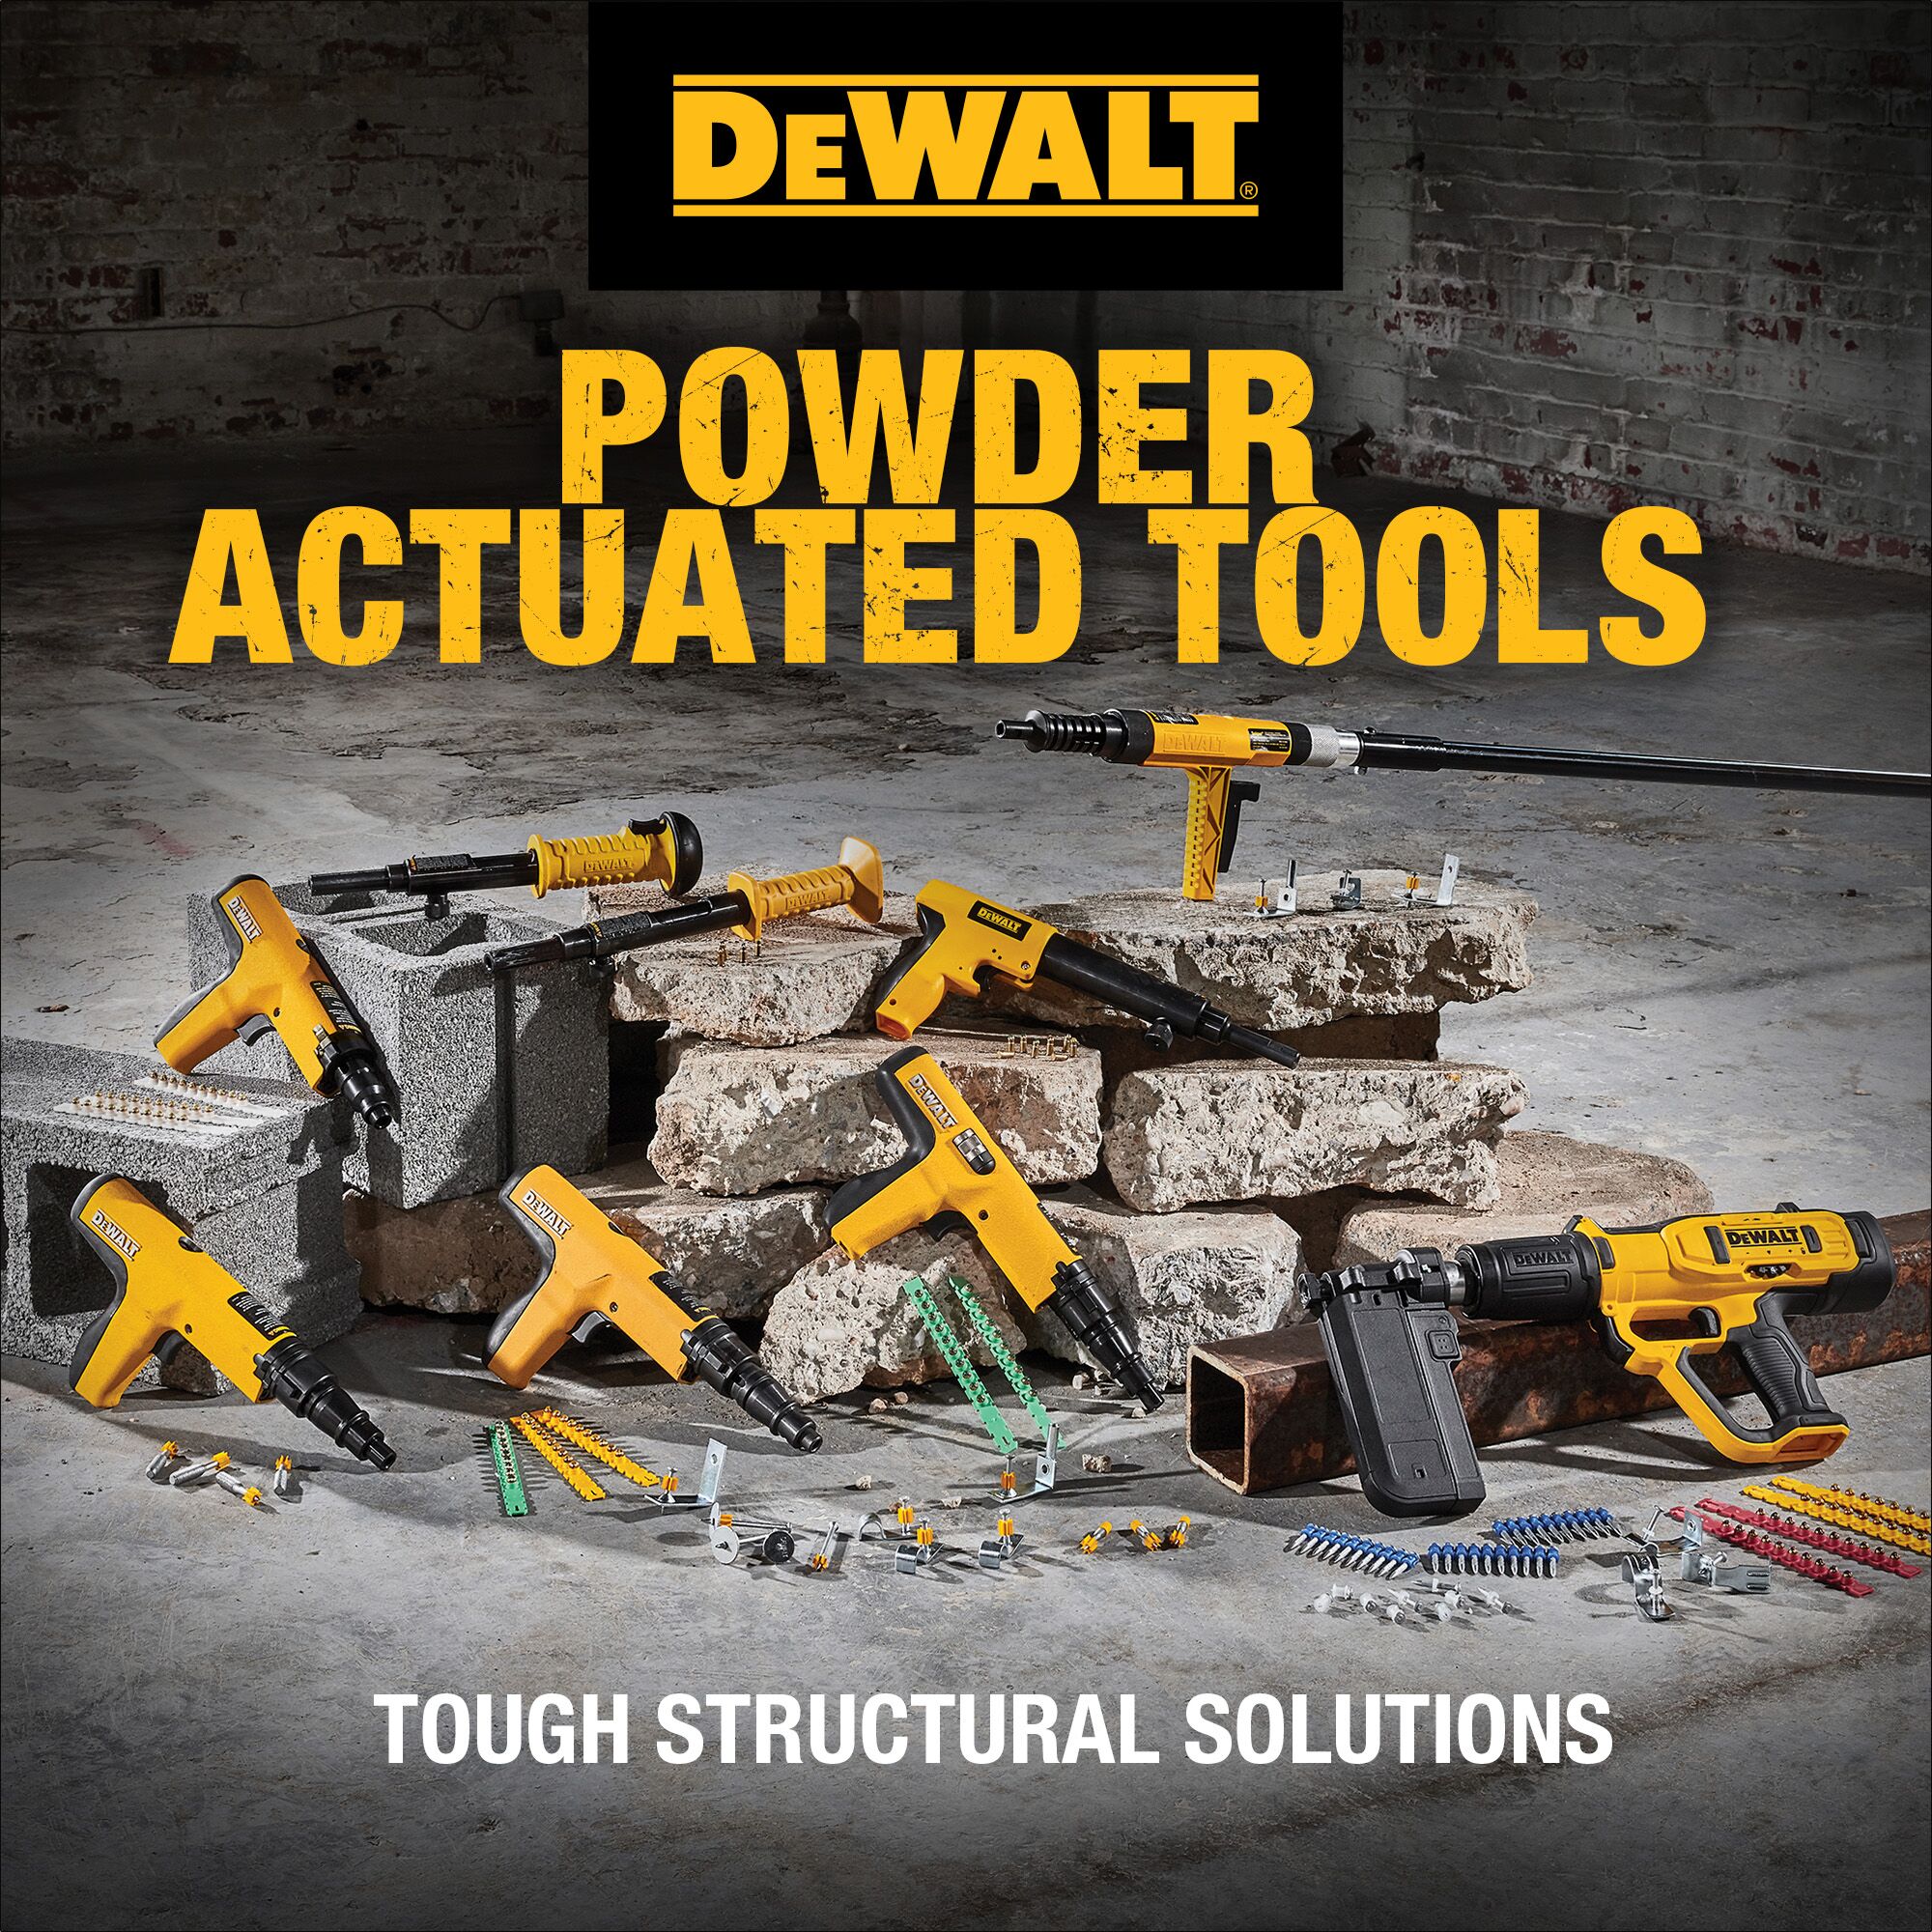 Family shot of DeWalt Powder Actuated Tools